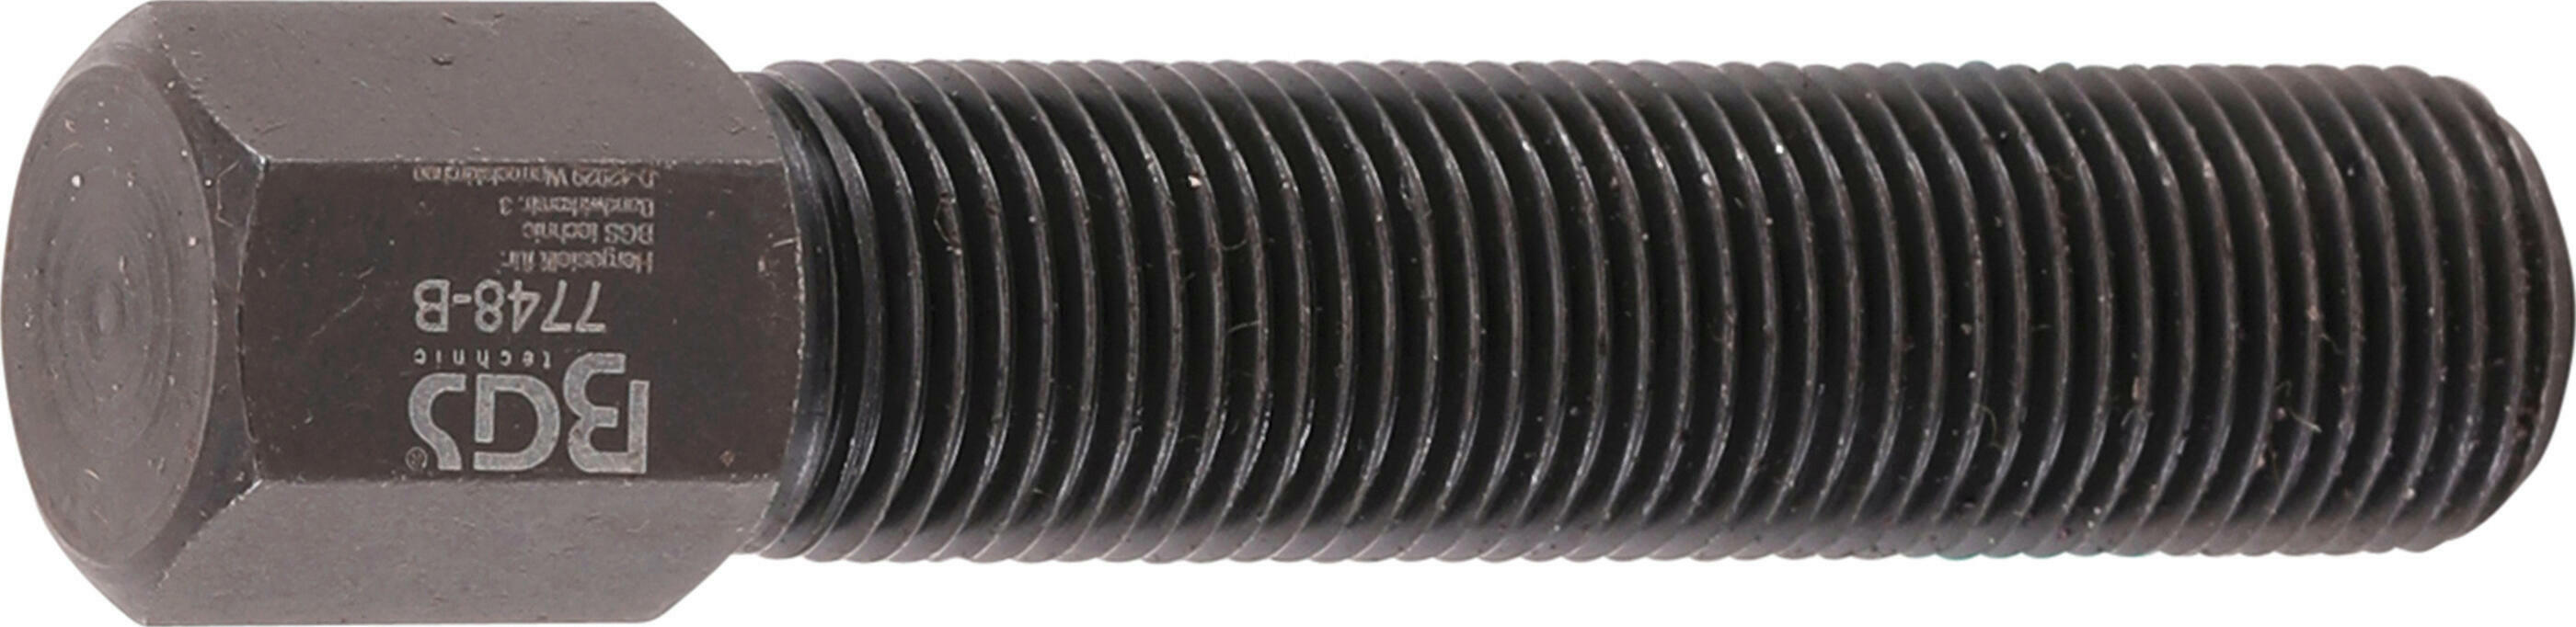 Polrad-Abdrückspindel | M16 x 1,5 mm